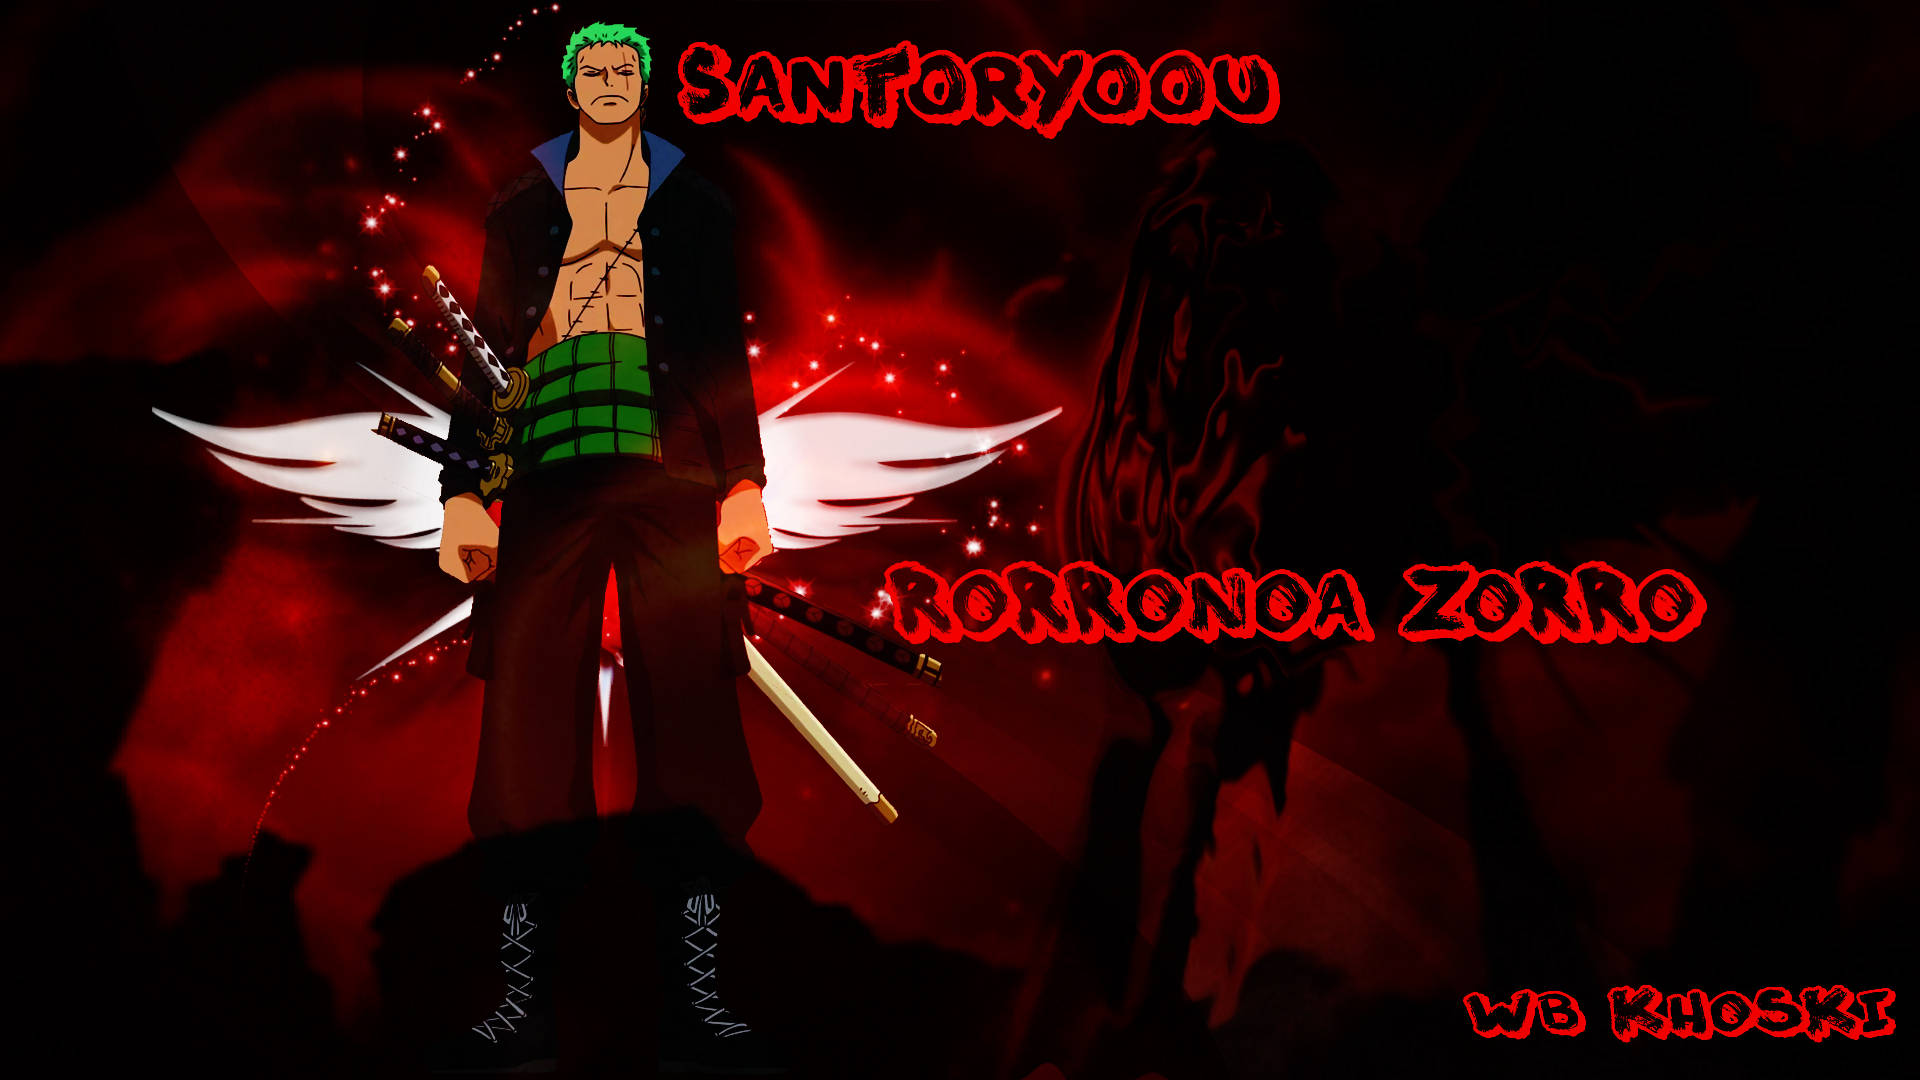 Roronoa Zoro - The Unstoppable Swordsman Background